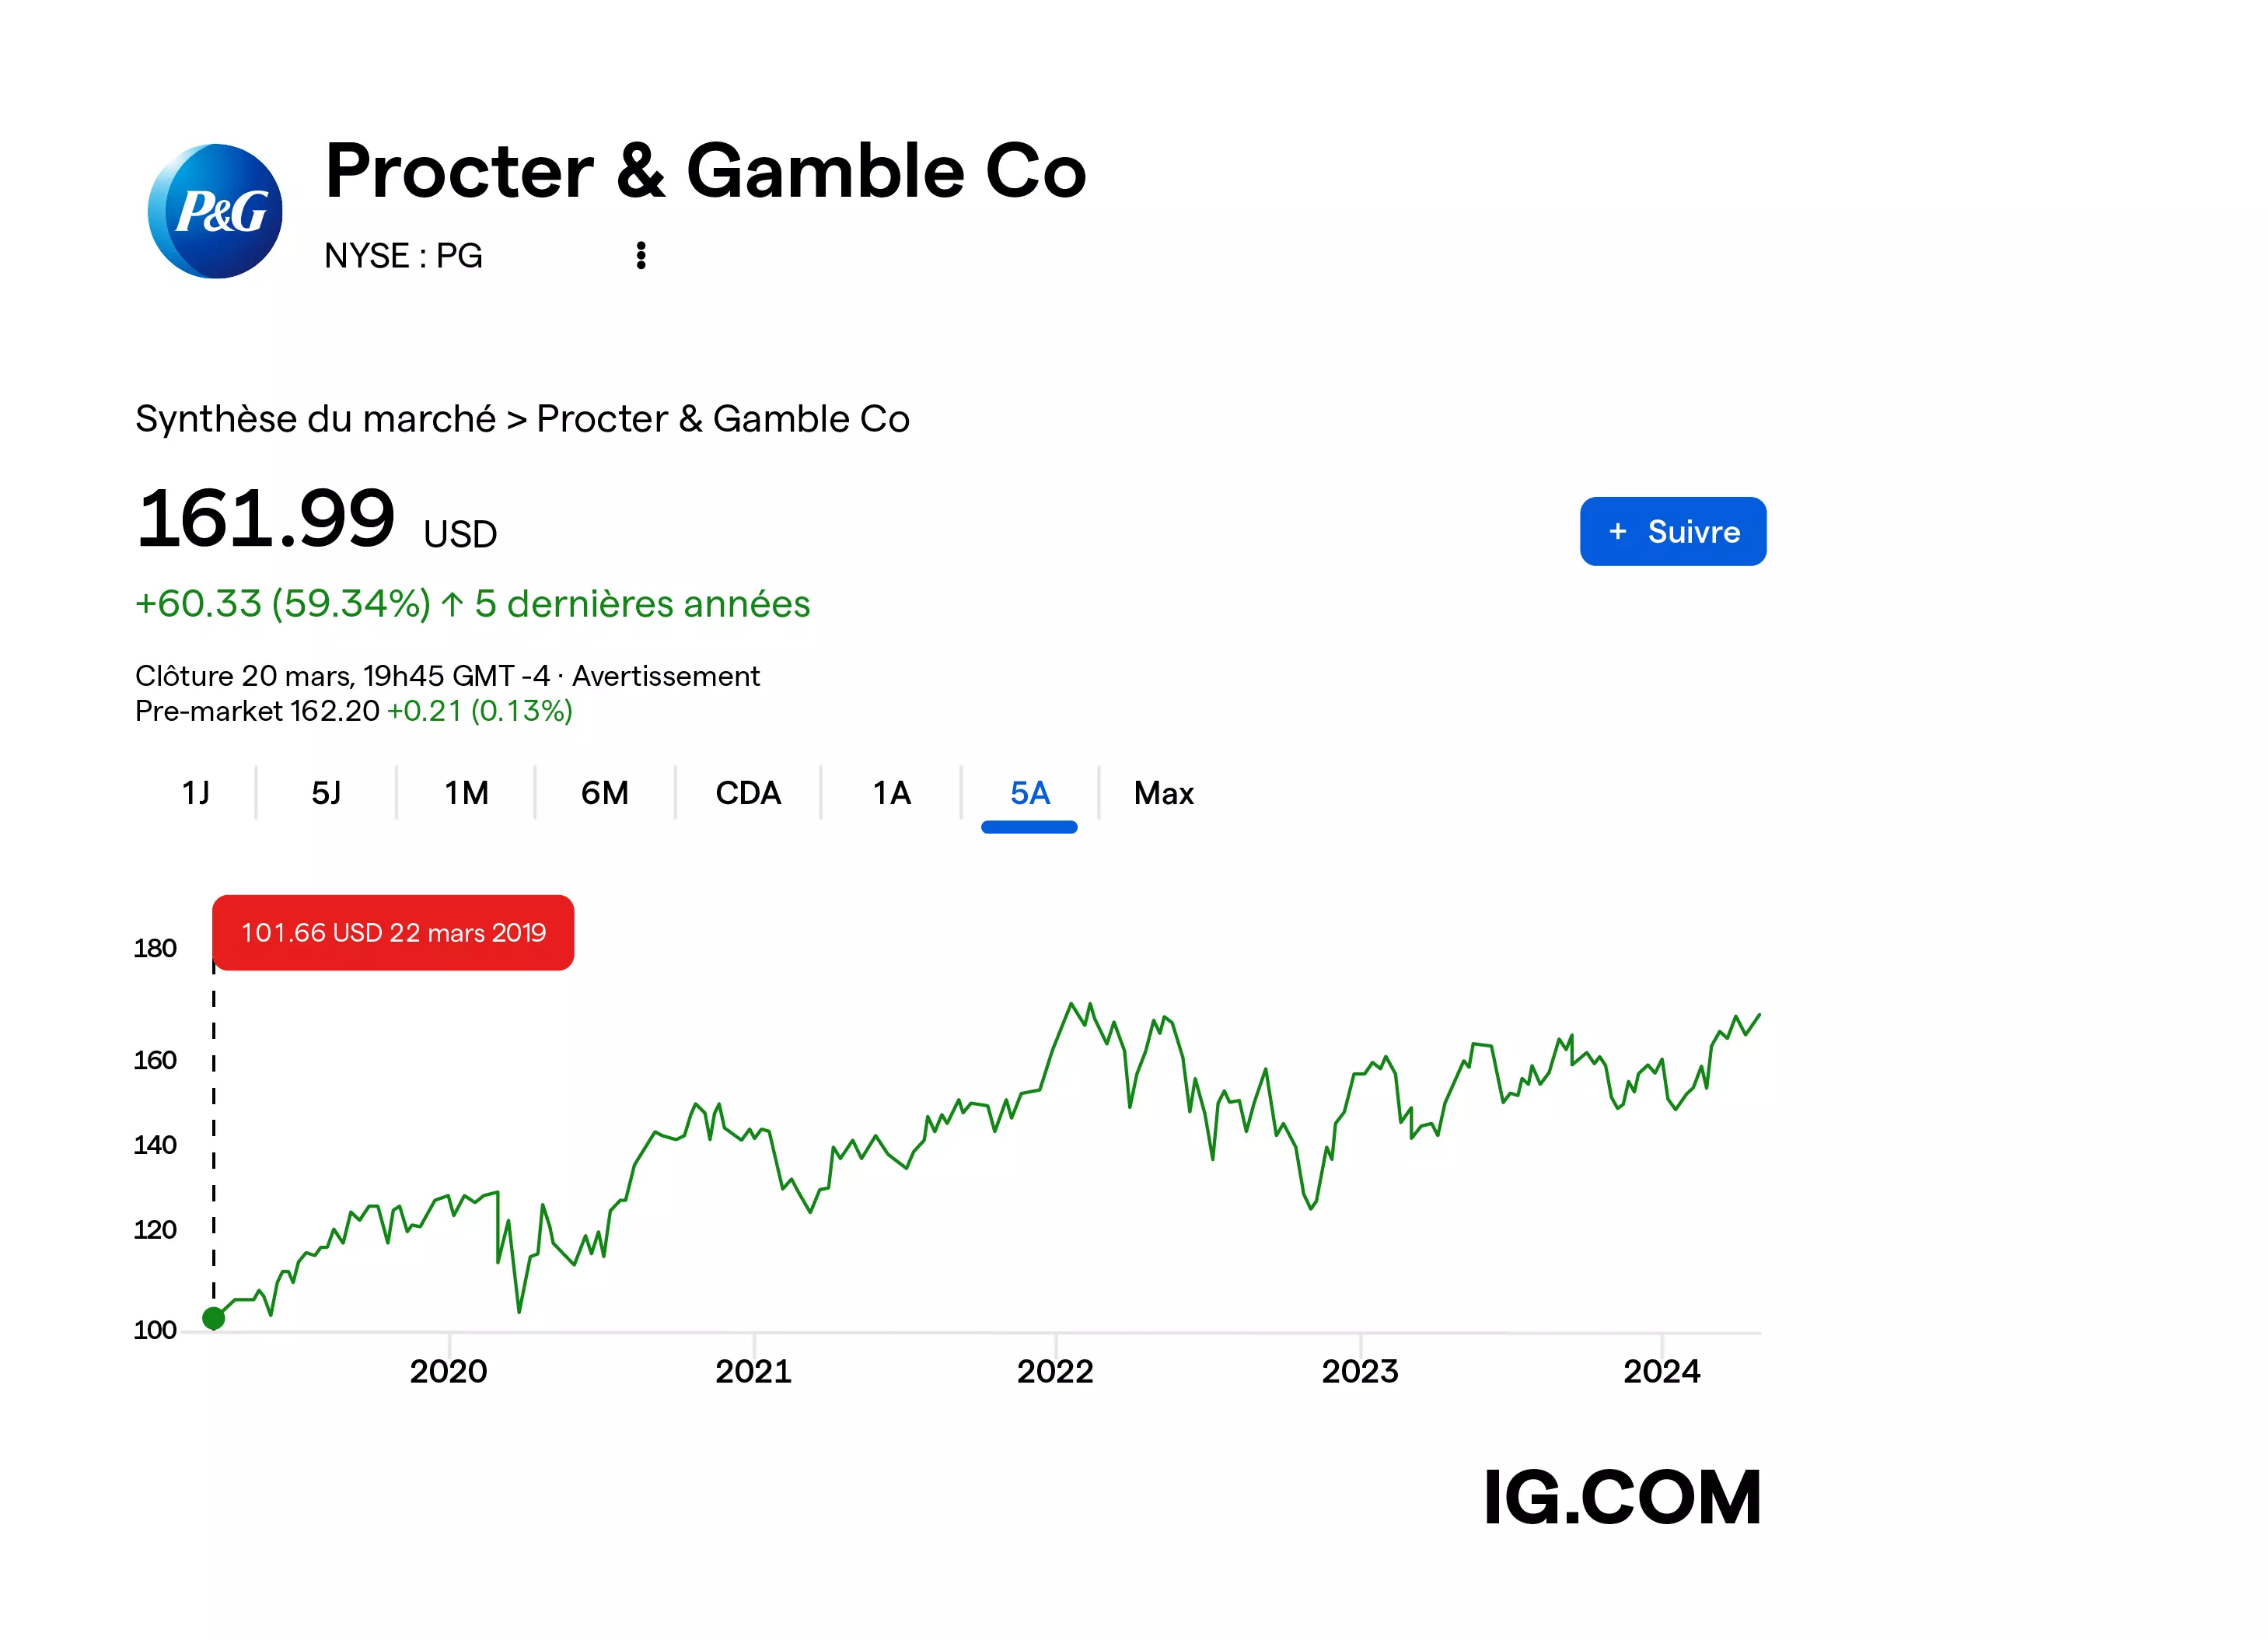 Procter & Gamble